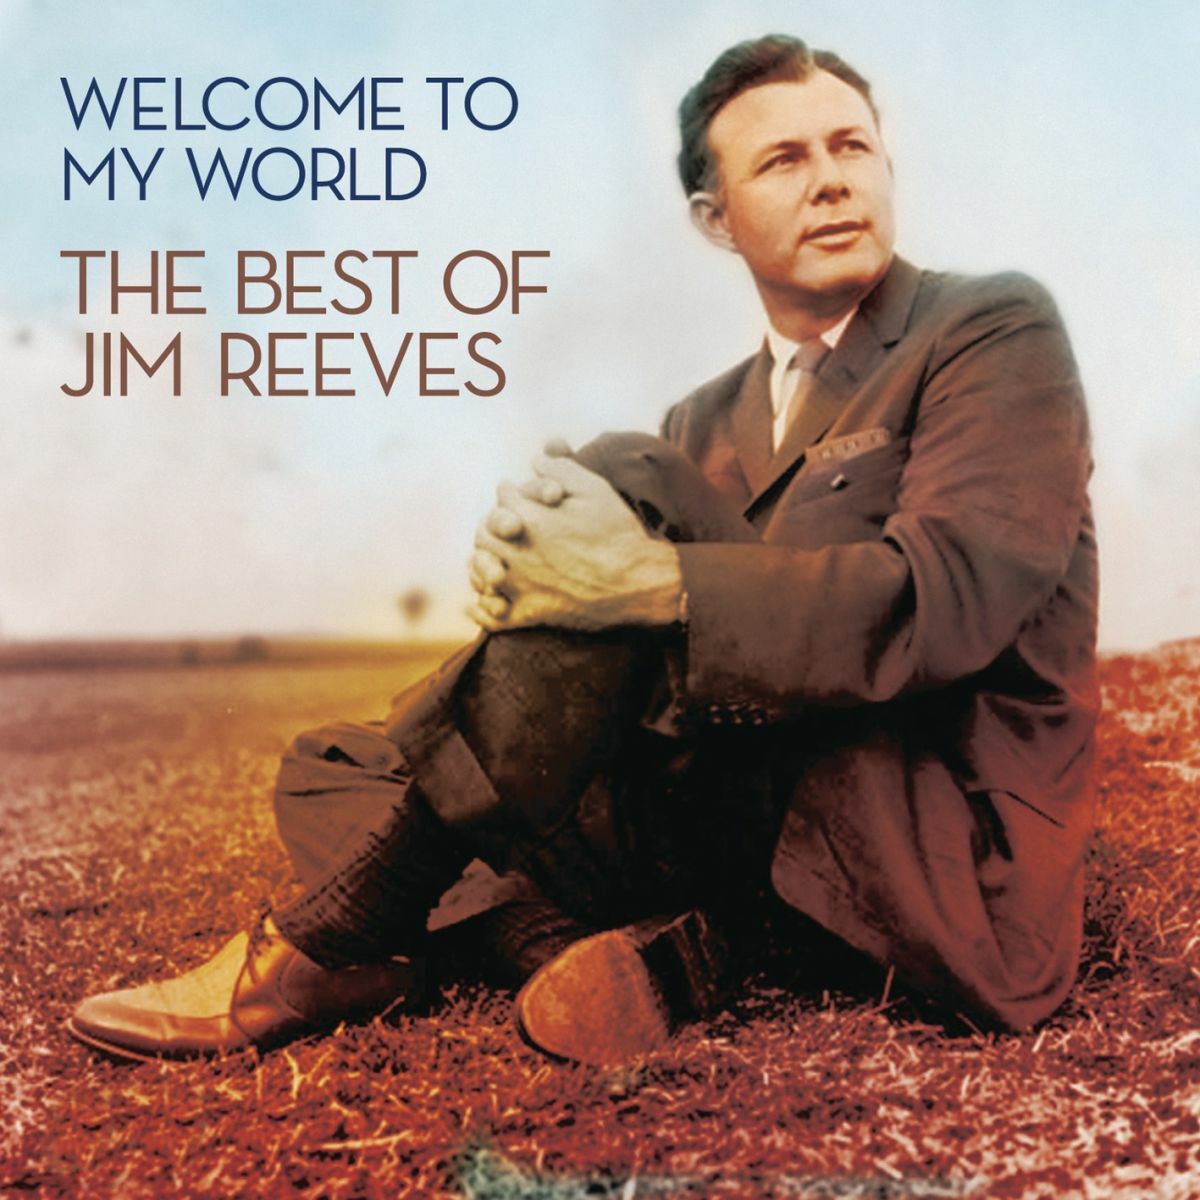 Jim Reeves: albums, songs, playlists | Listen on Deezer